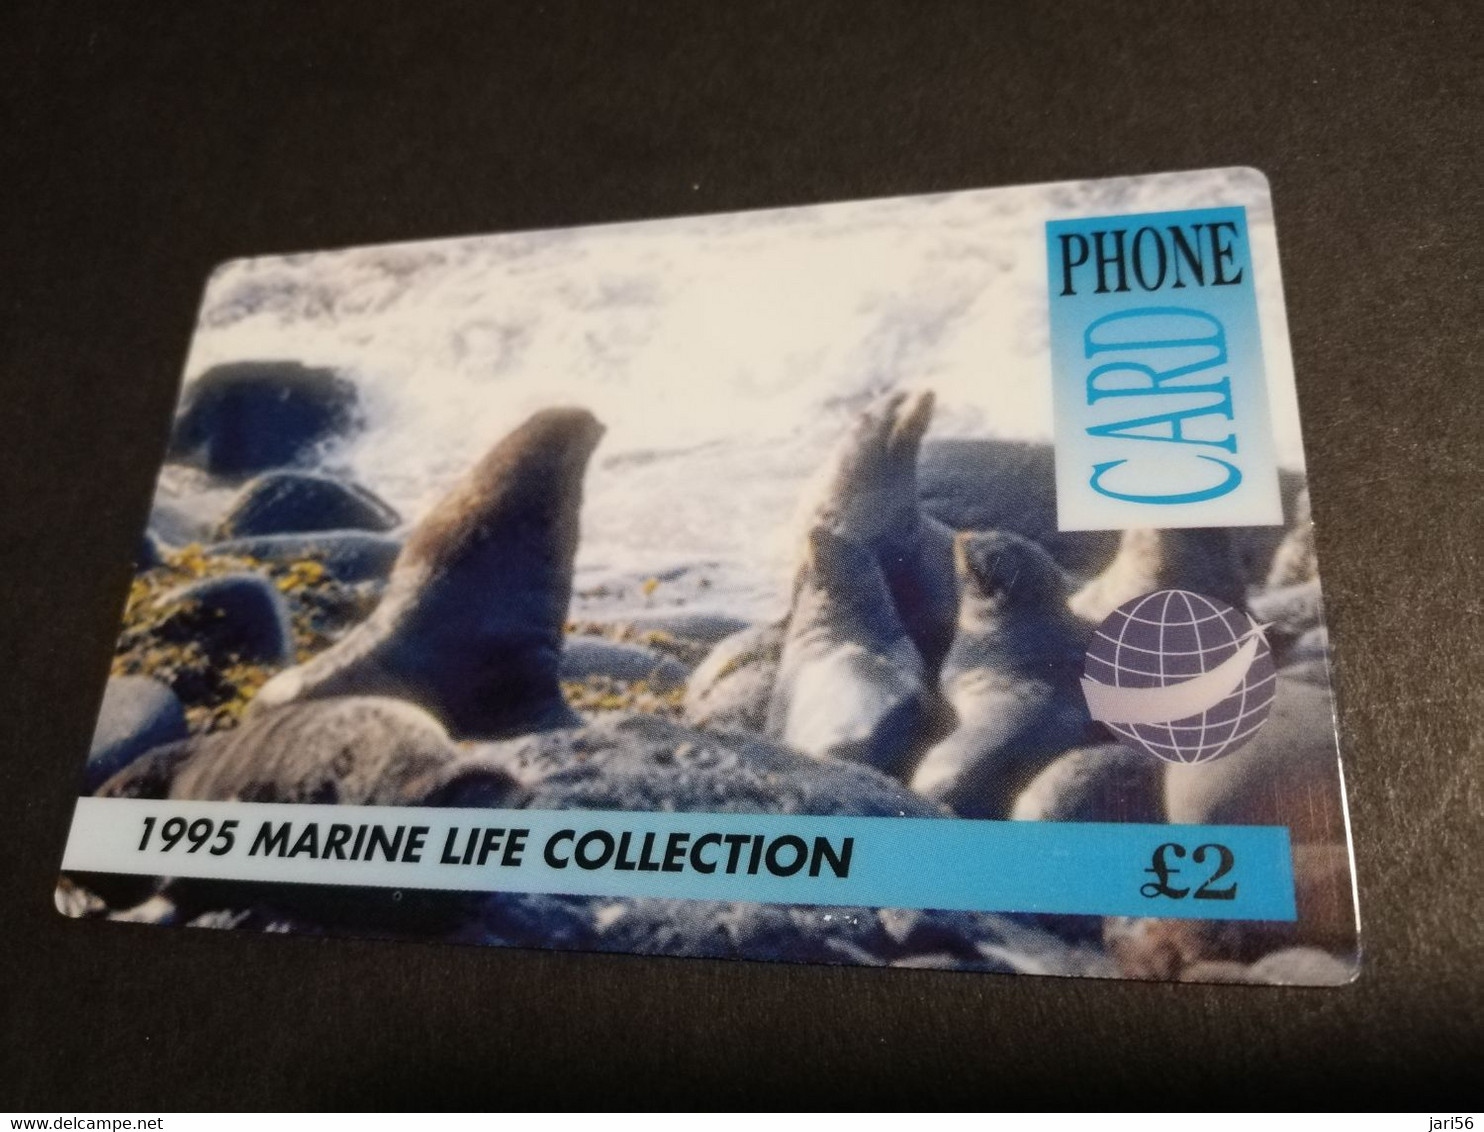 GREAT BRITAIN   2 POUND   MARINE LIFE COLLECTION SEALION     DIT PHONECARD    PREPAID CARD      **5925** - Verzamelingen